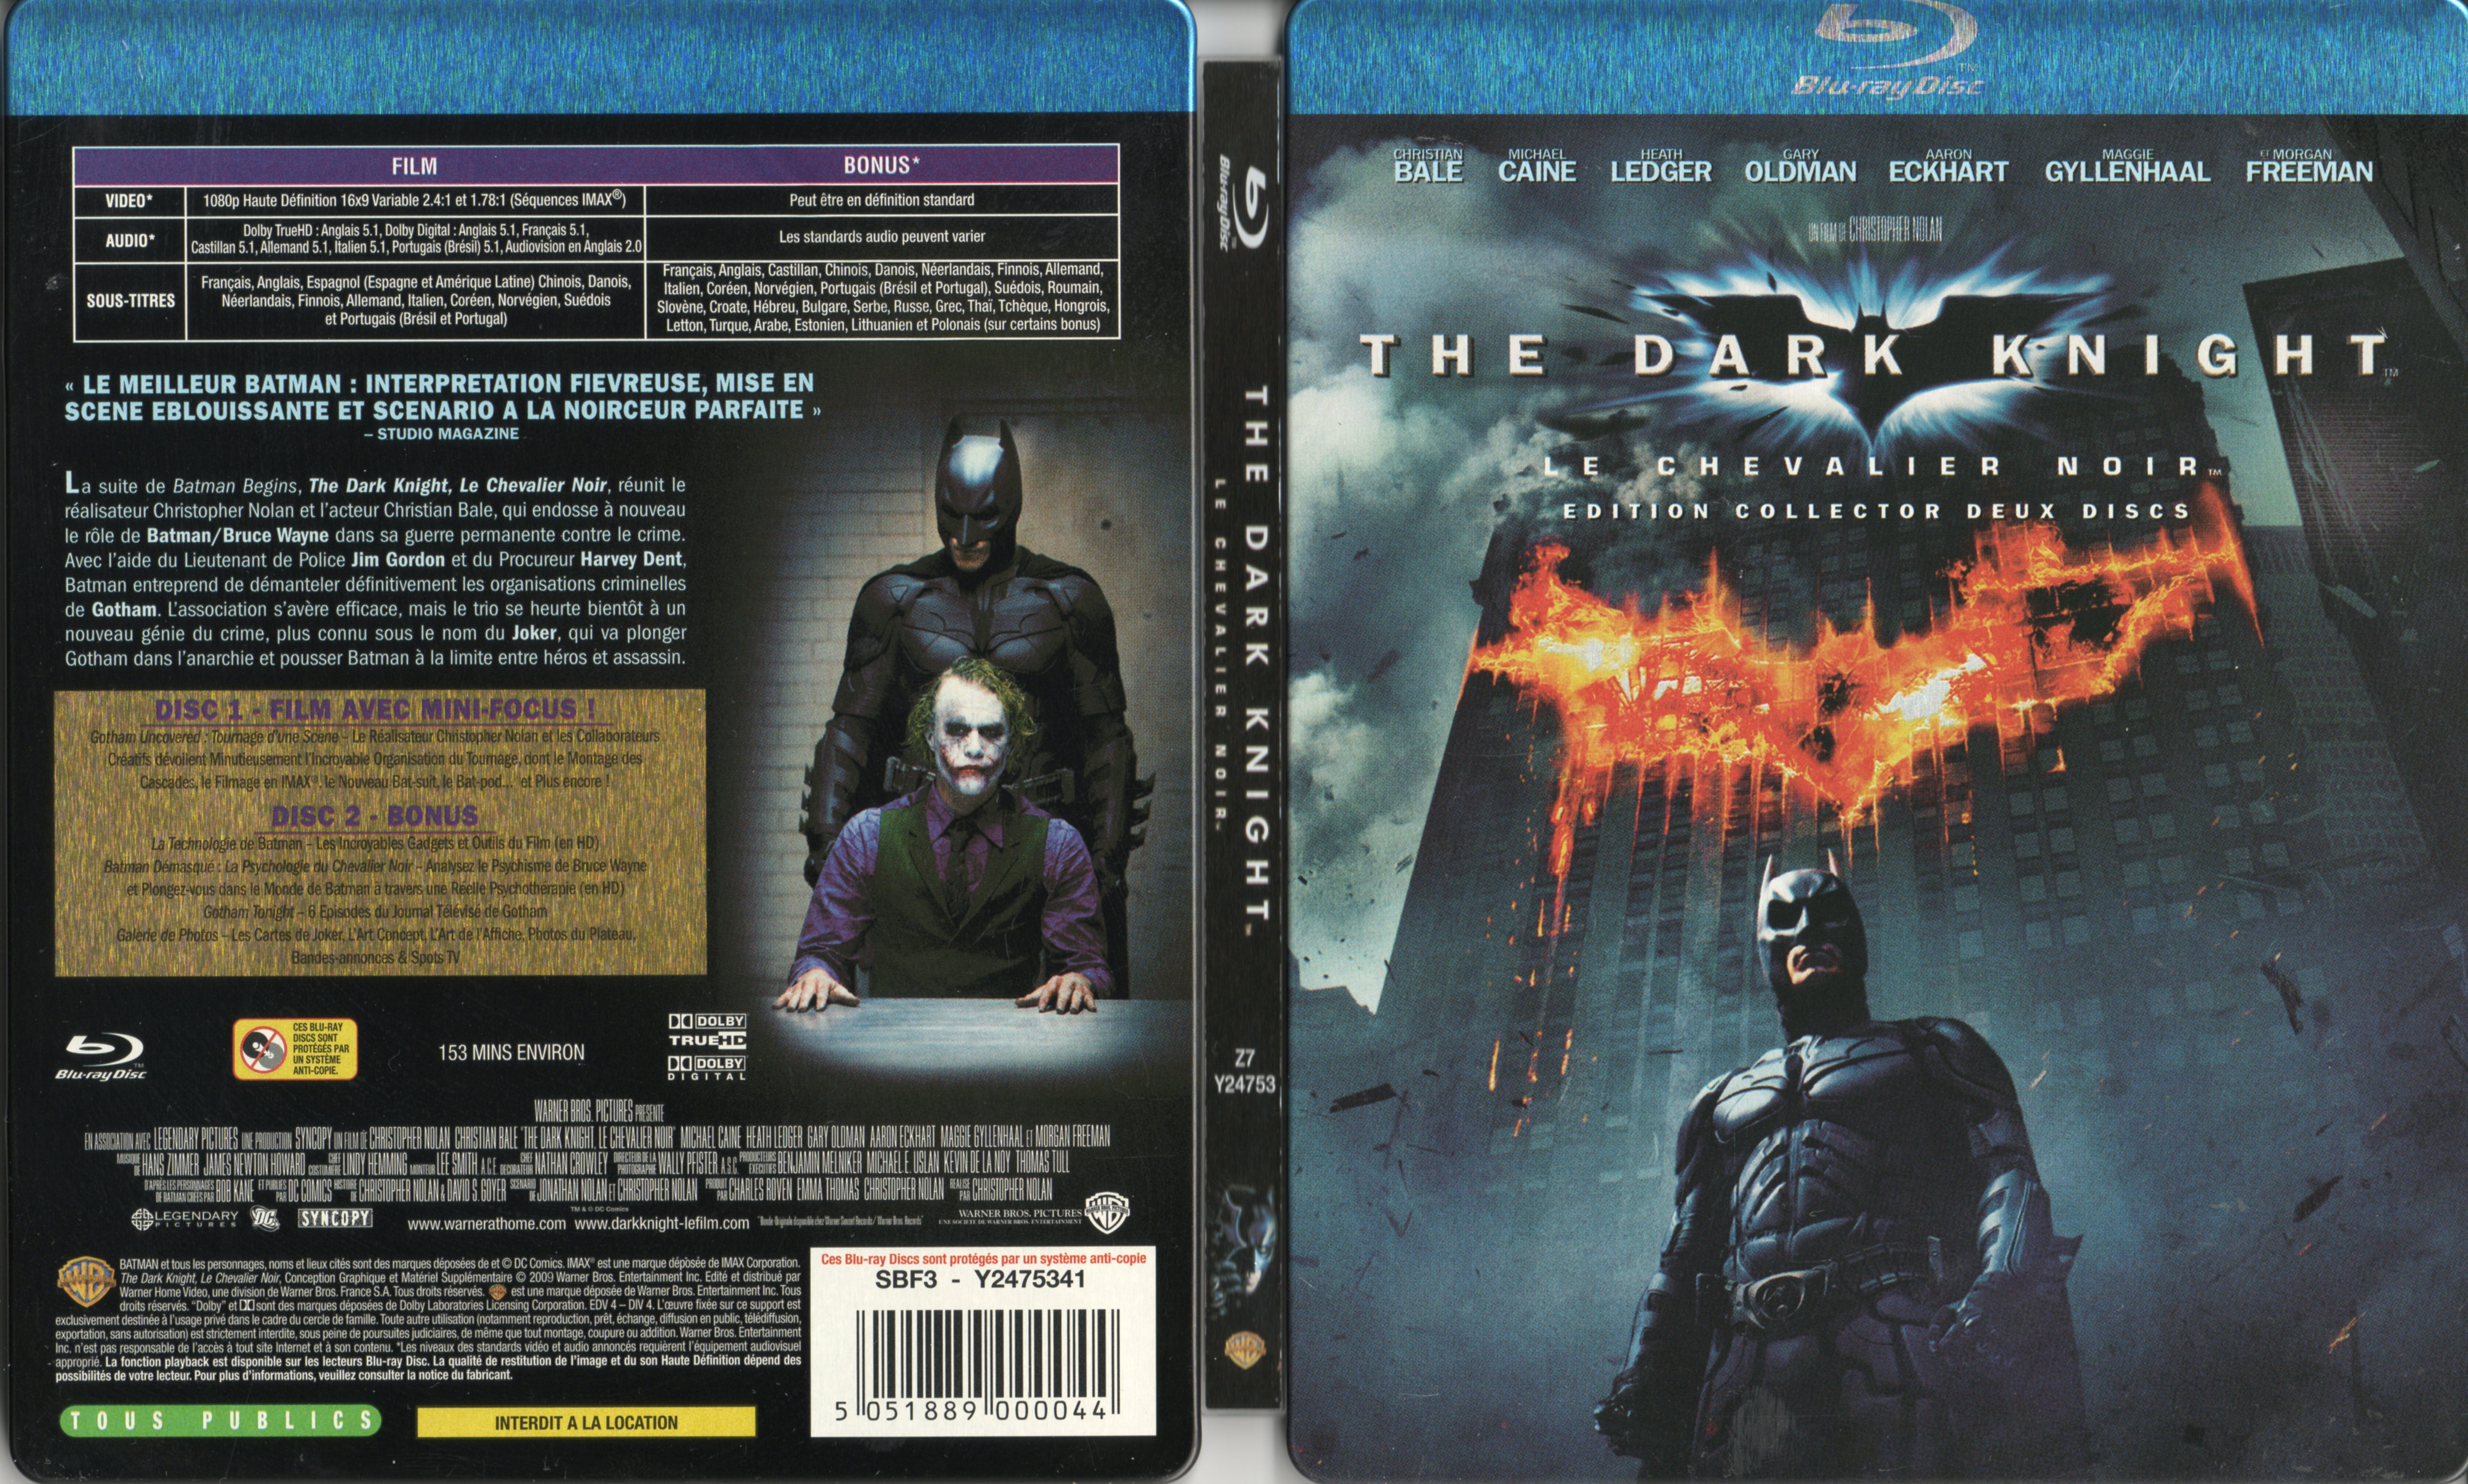 Jaquette DVD The dark knight (BLU-RAY) v2